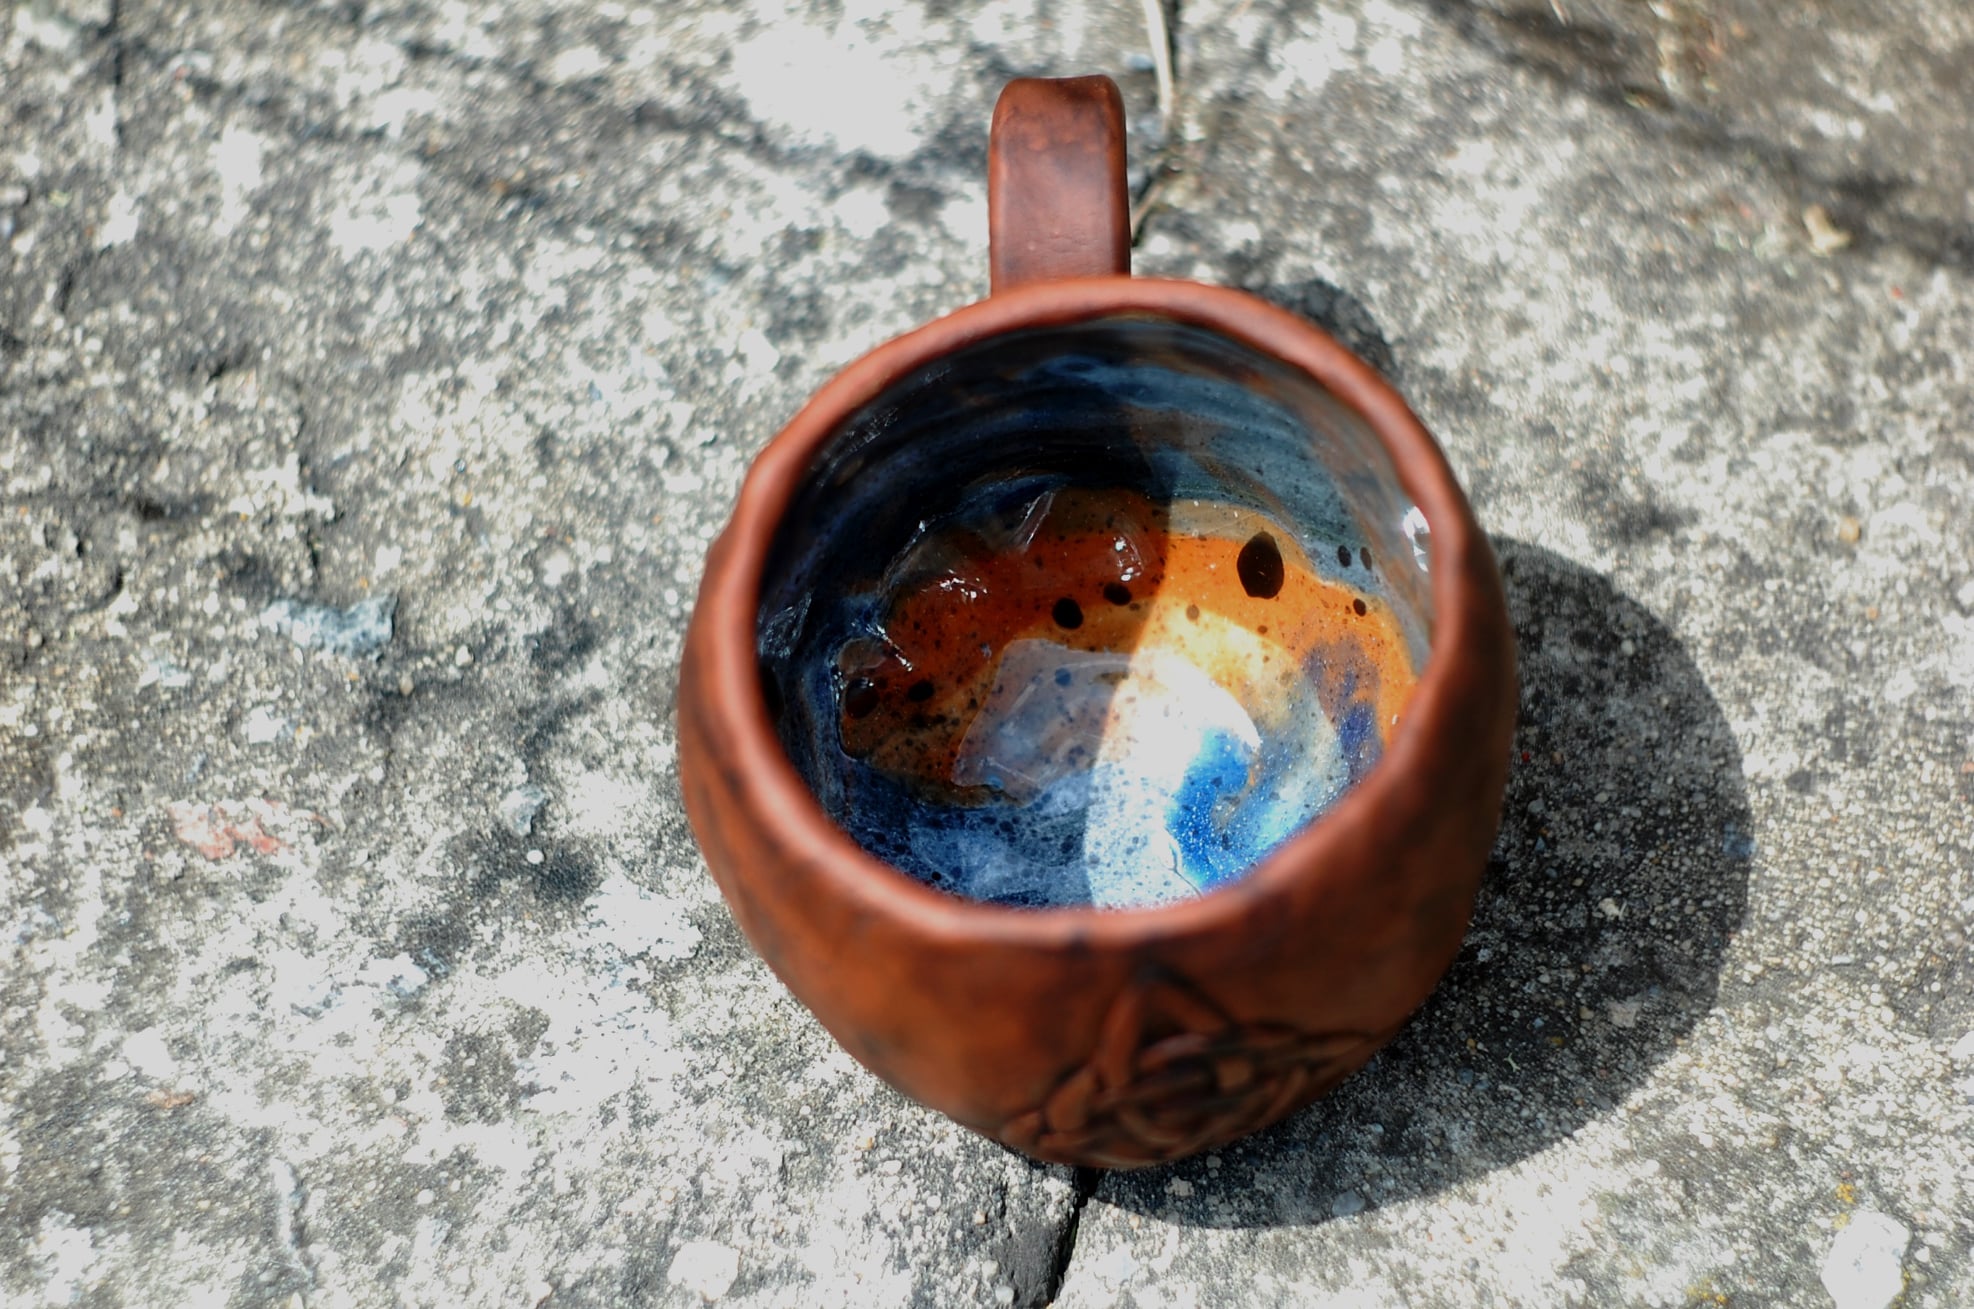 Handmade Triquetra Viking pottery mug w/ handle ~13oz